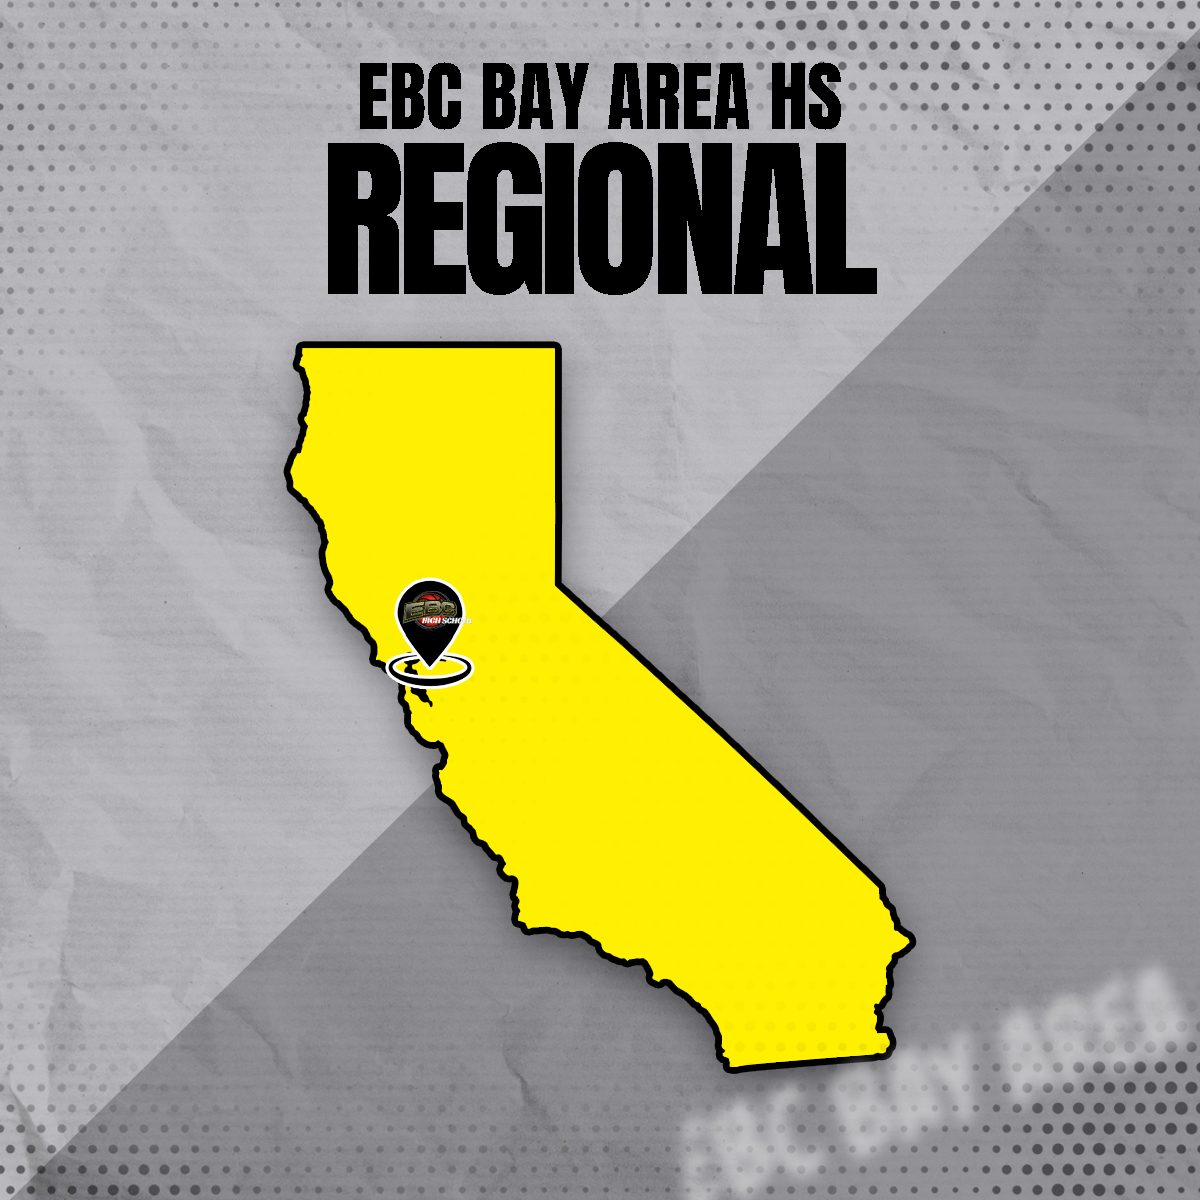 EBC Bay Area HS, Sept 30 - Oct 1